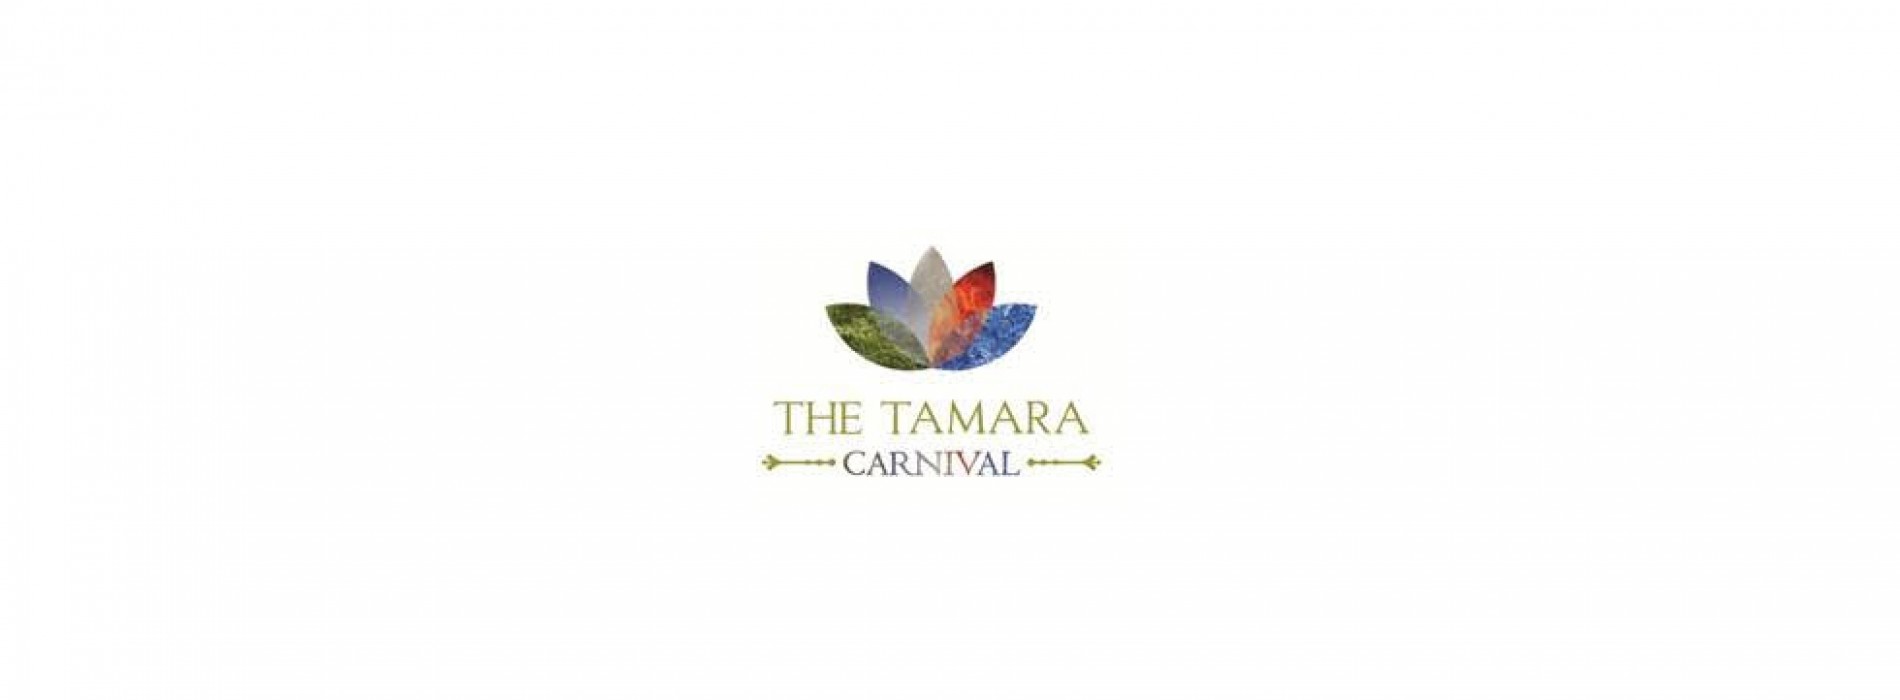 The Tamara Coorg returns with its much awaited annual cultural extravaganza – The Tamara Carnival